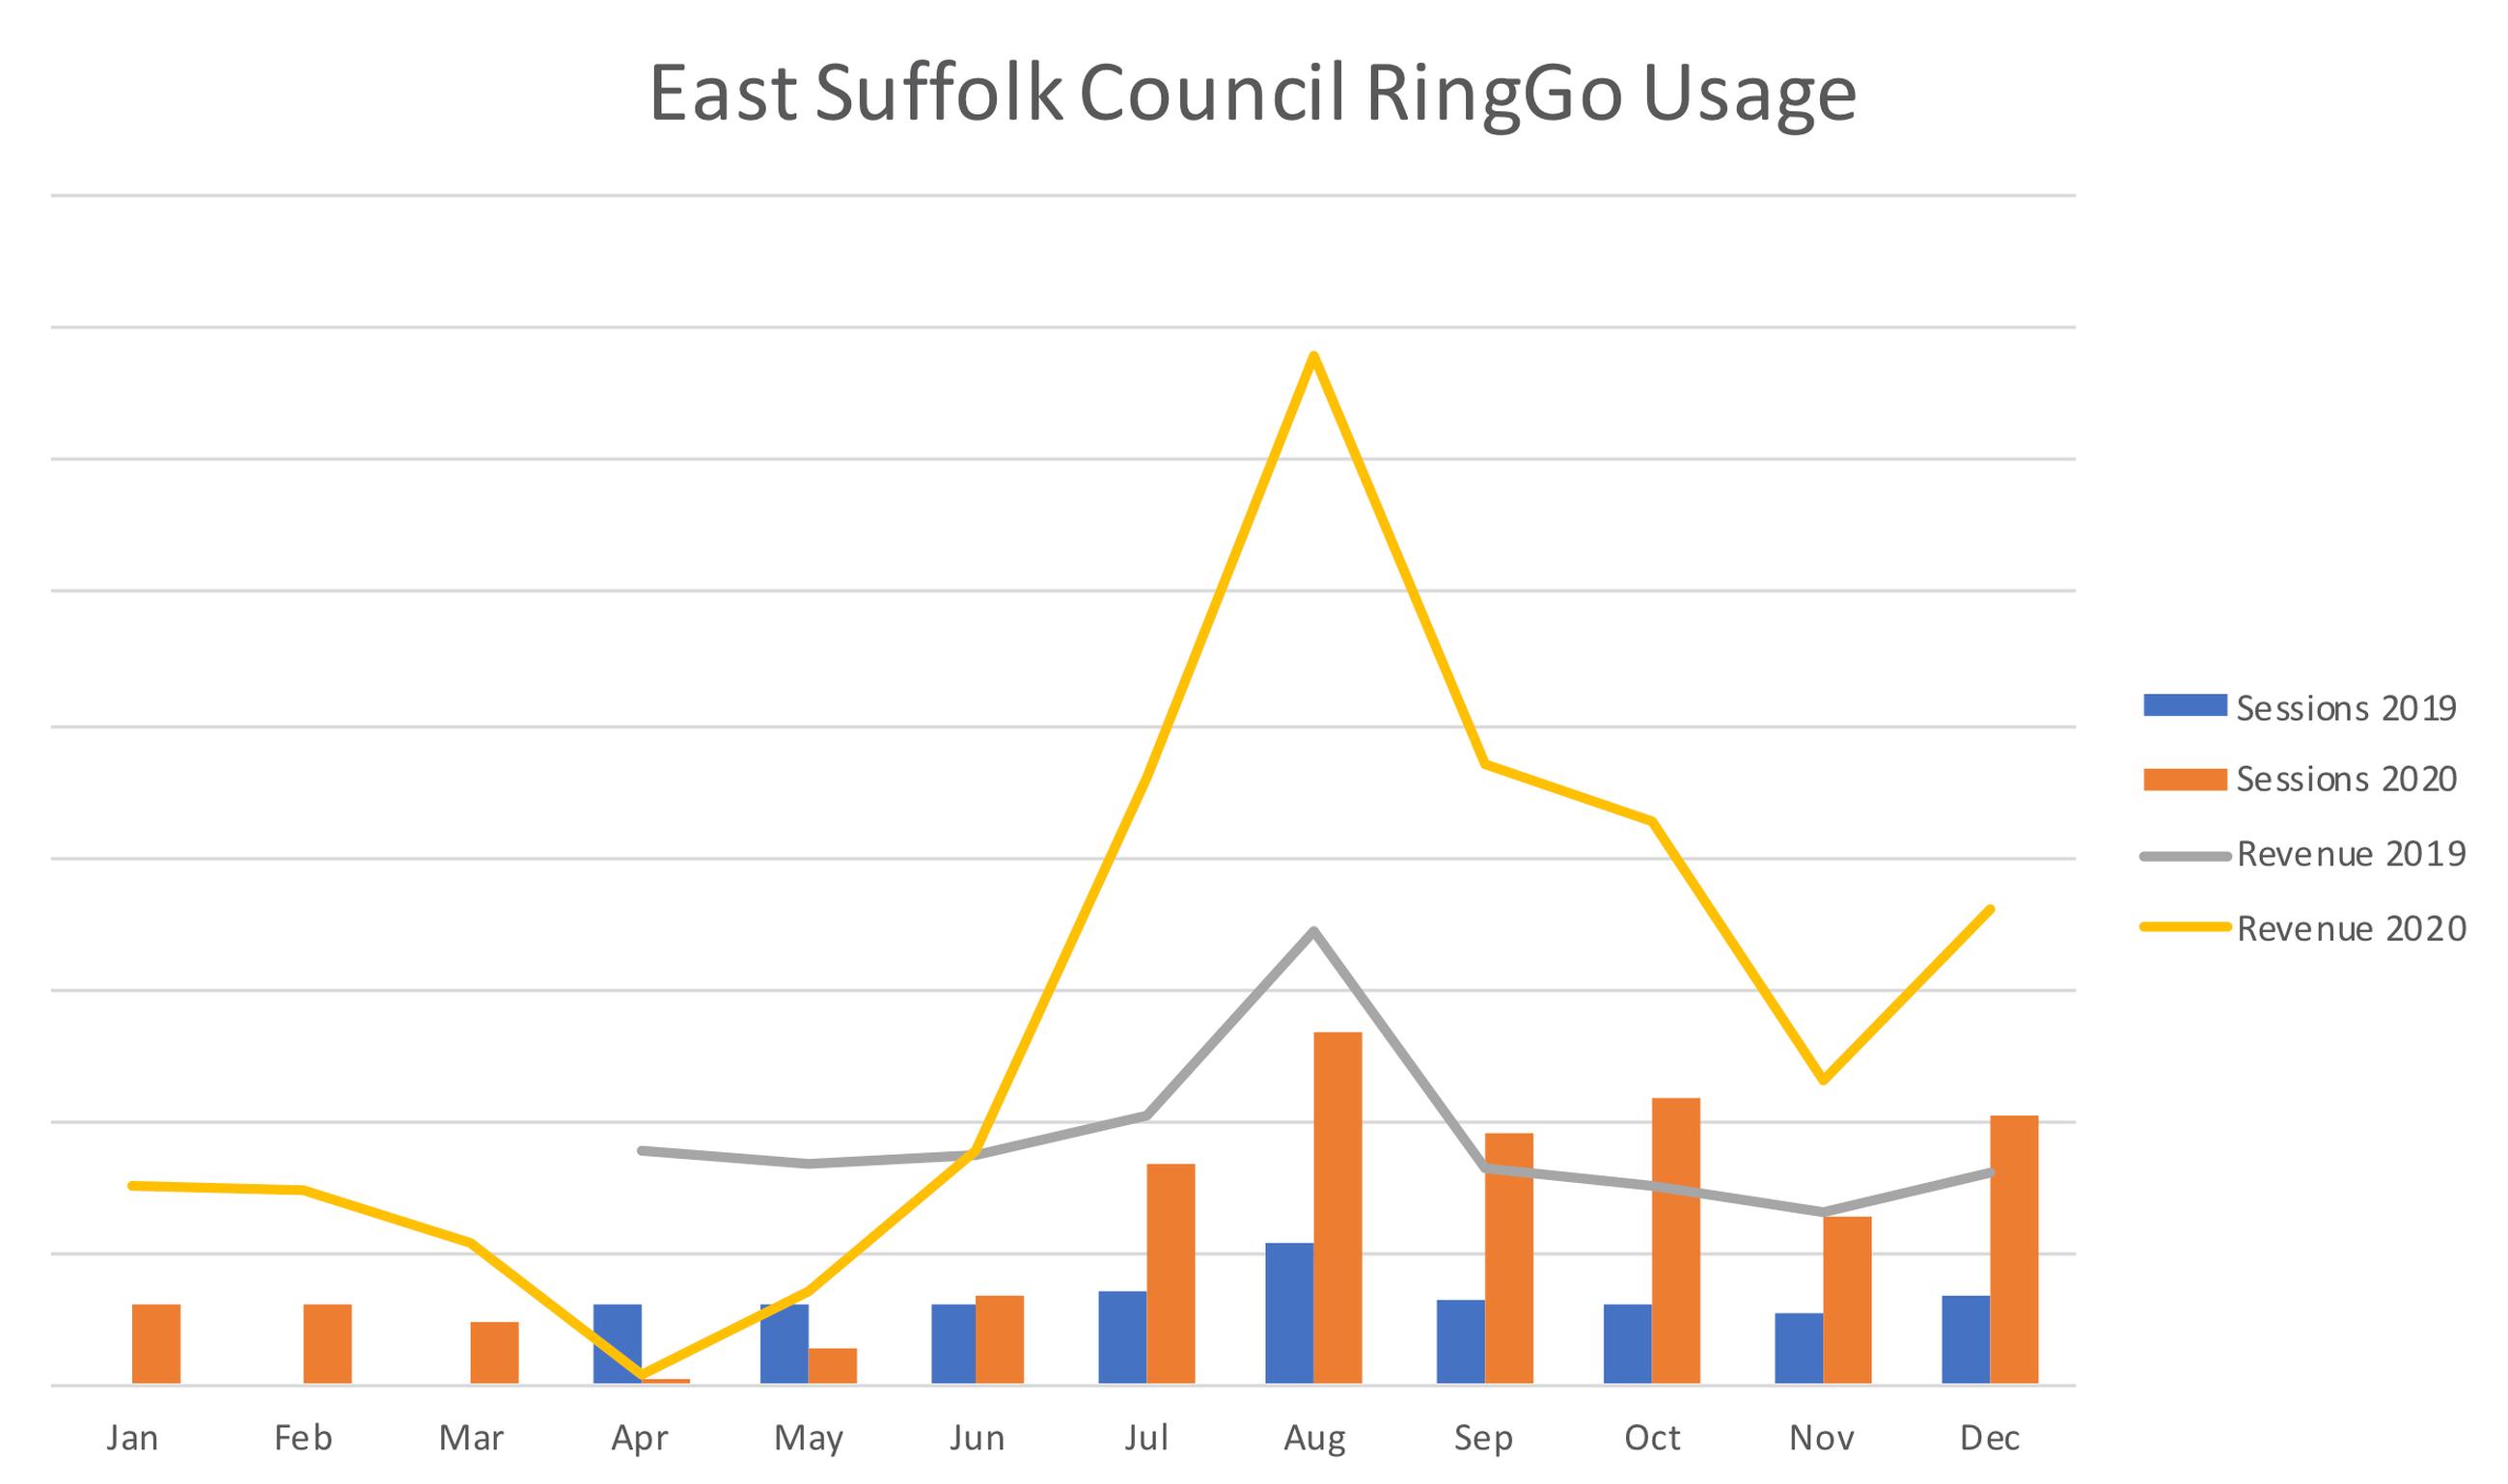 RingGo usage in East Sussex